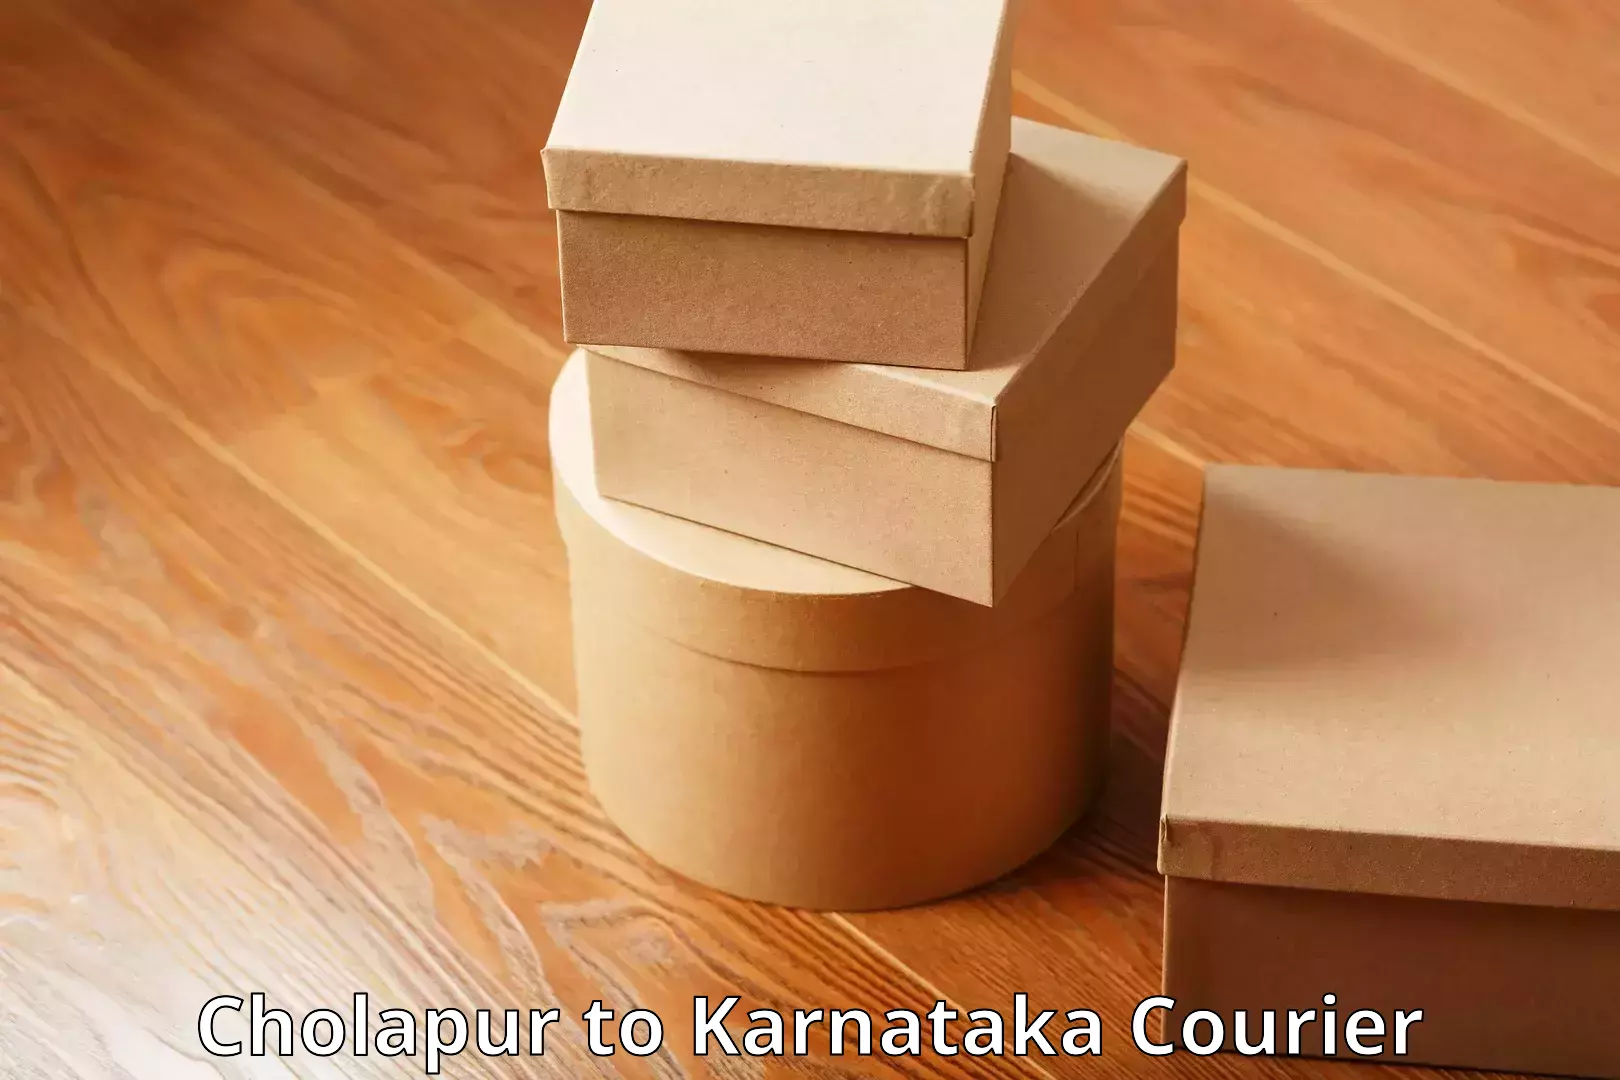 Luggage shipment specialists Cholapur to Karnataka